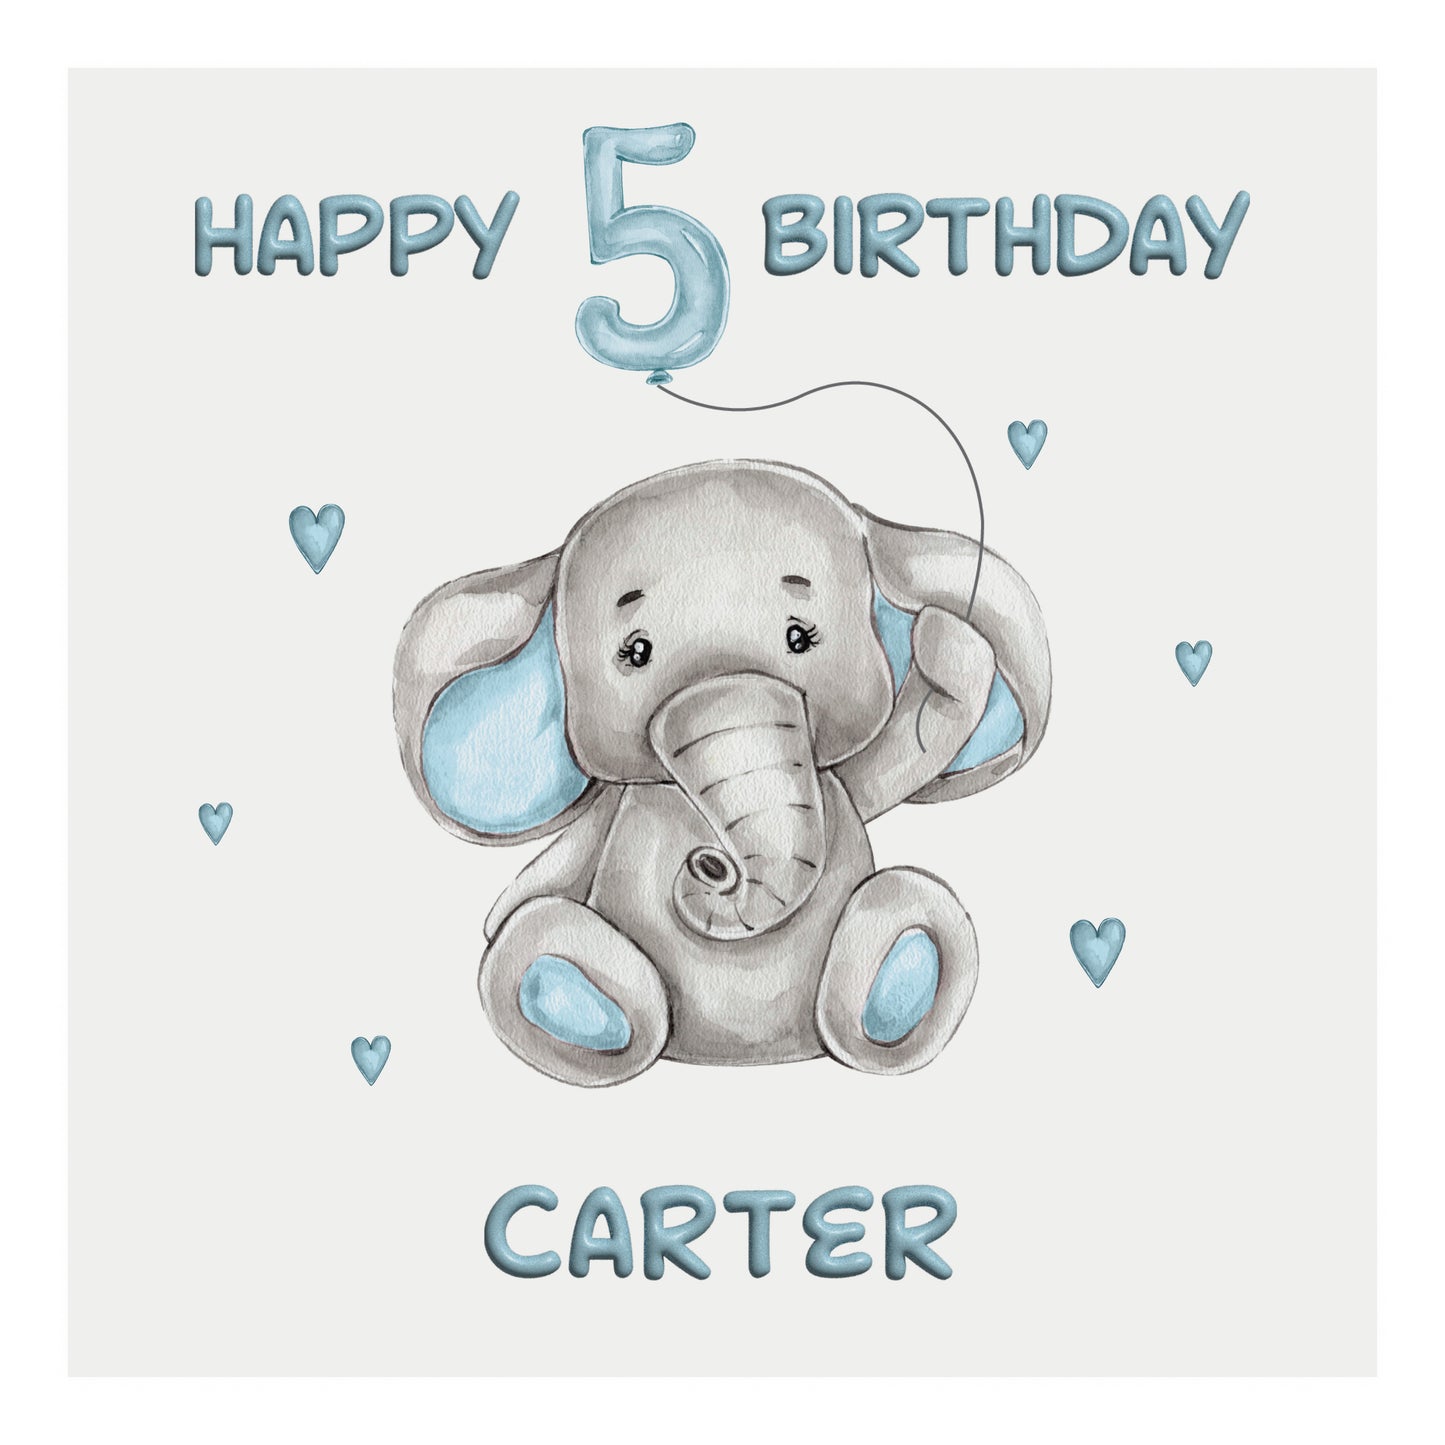 Personalised Birthday Card Balloon Animals (Elephant)